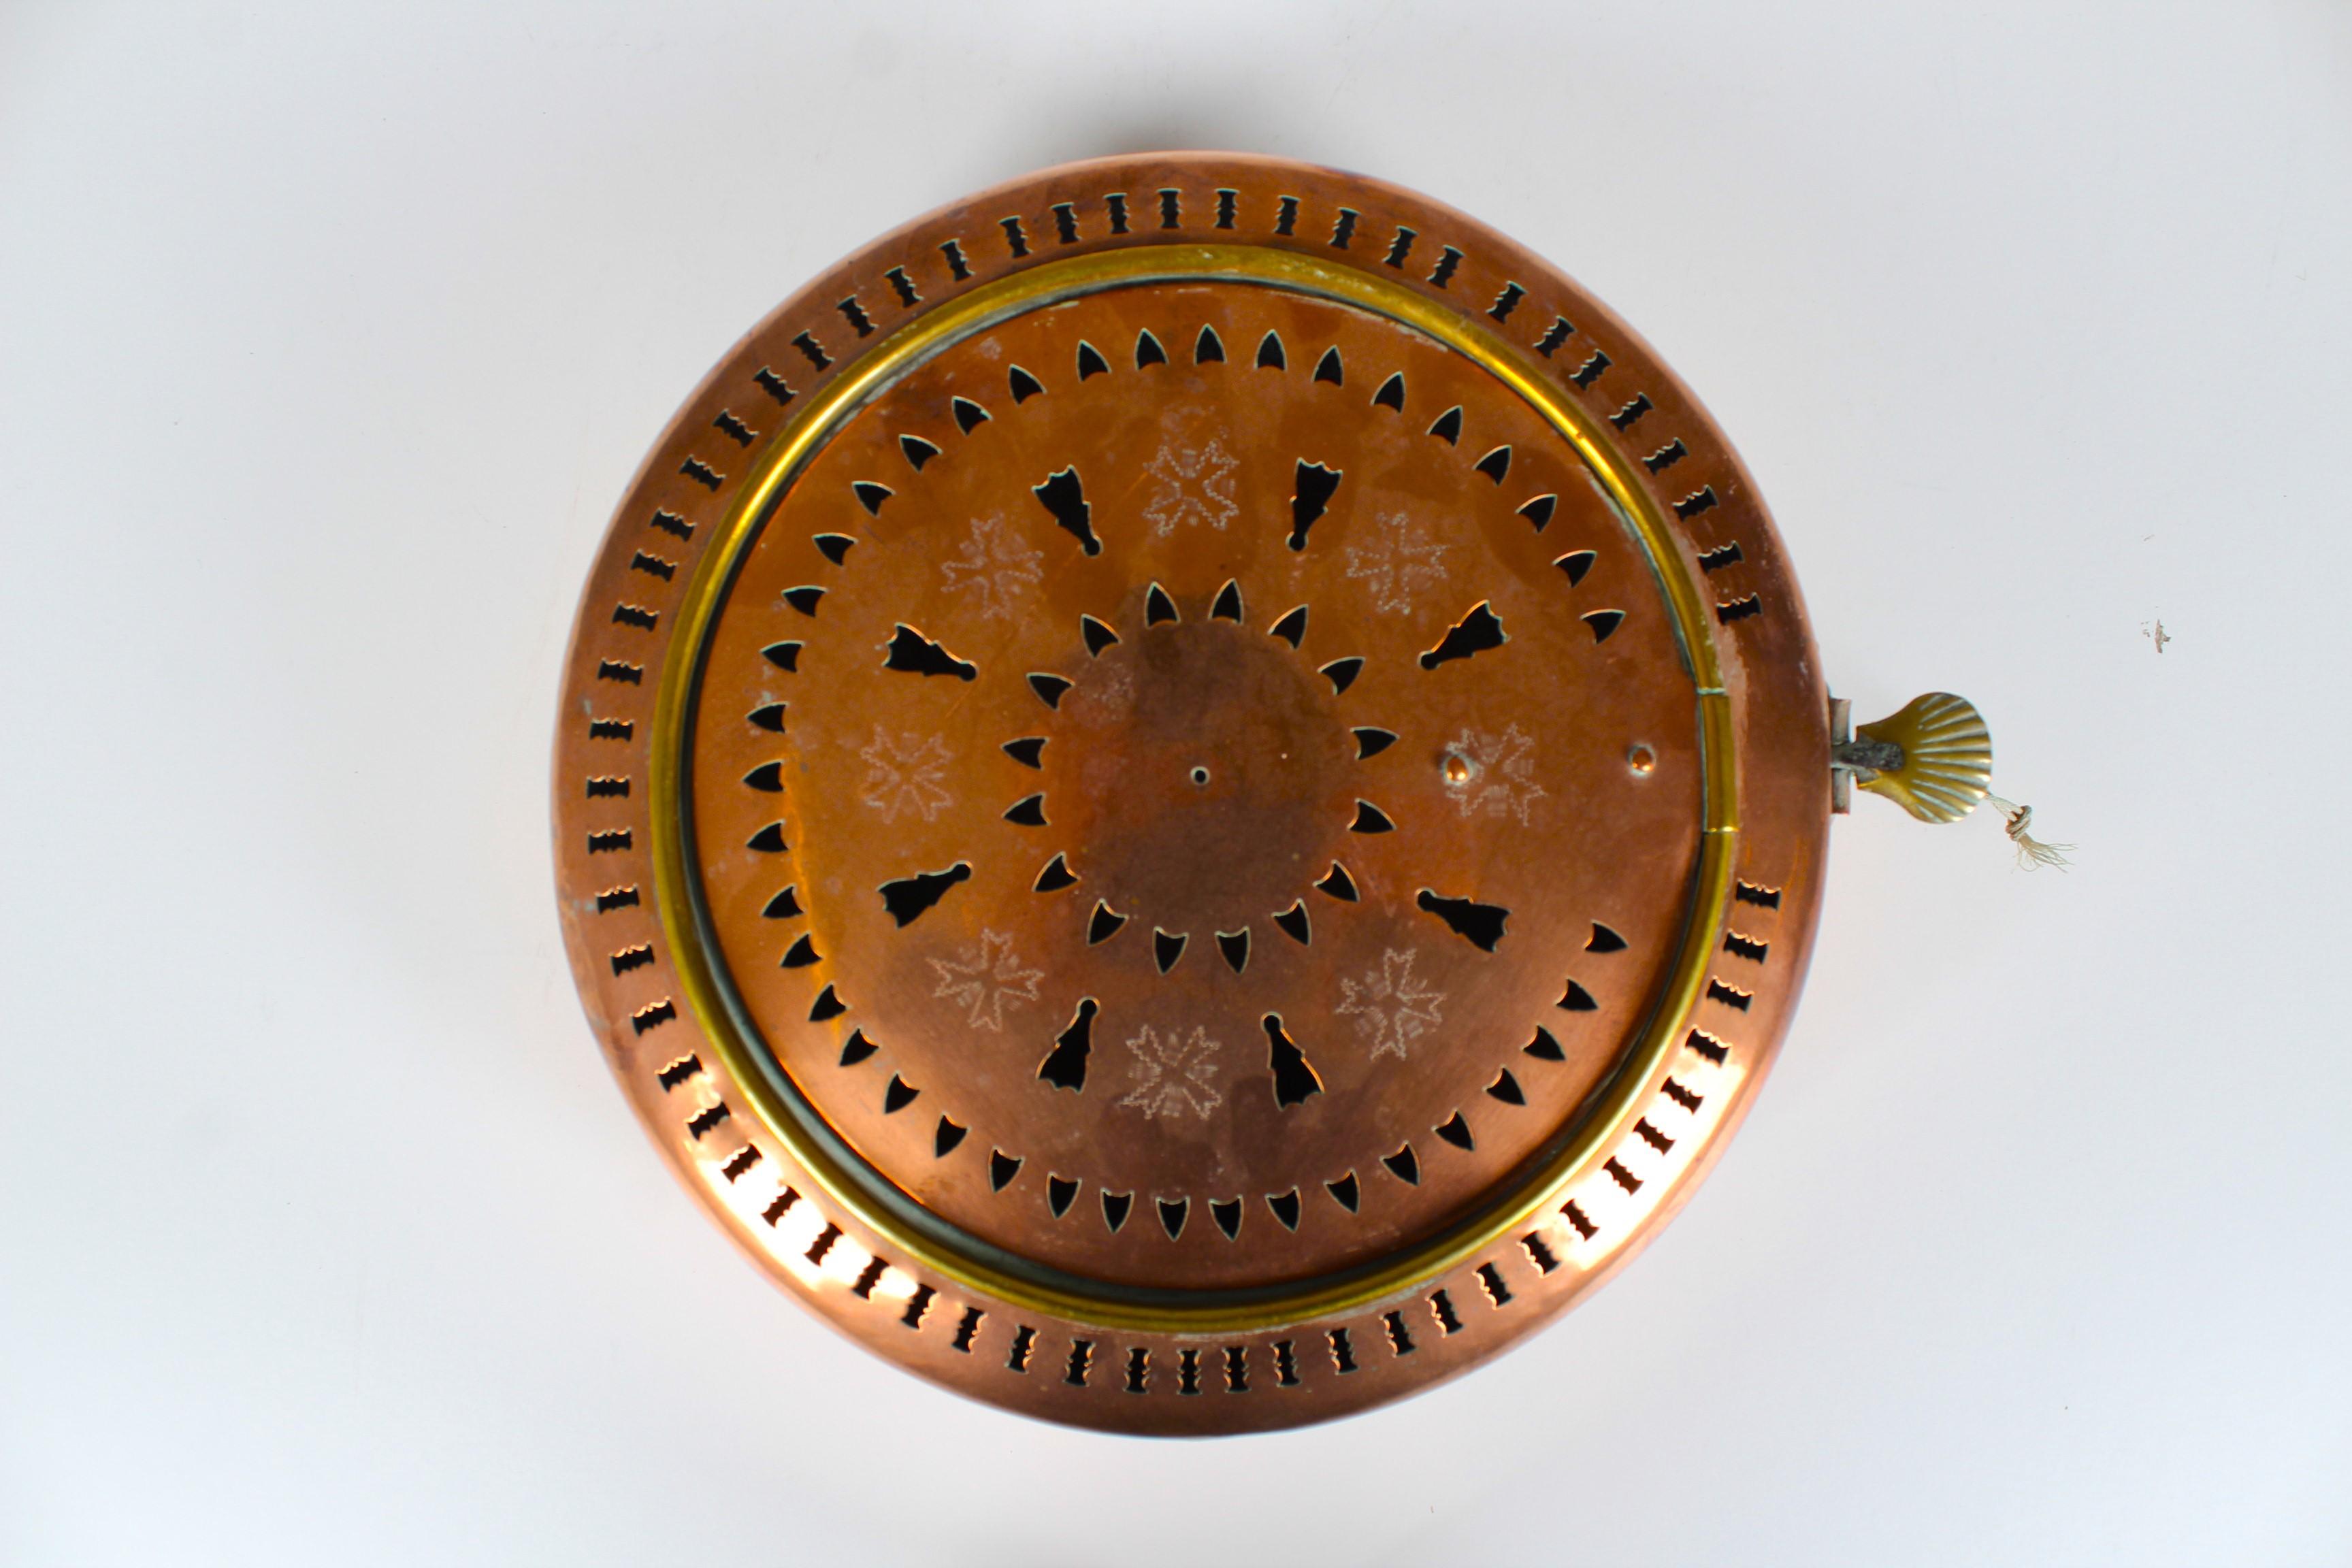 Antique Bassinoire, Warming Pan, Copper, France, 1880s For Sale 3